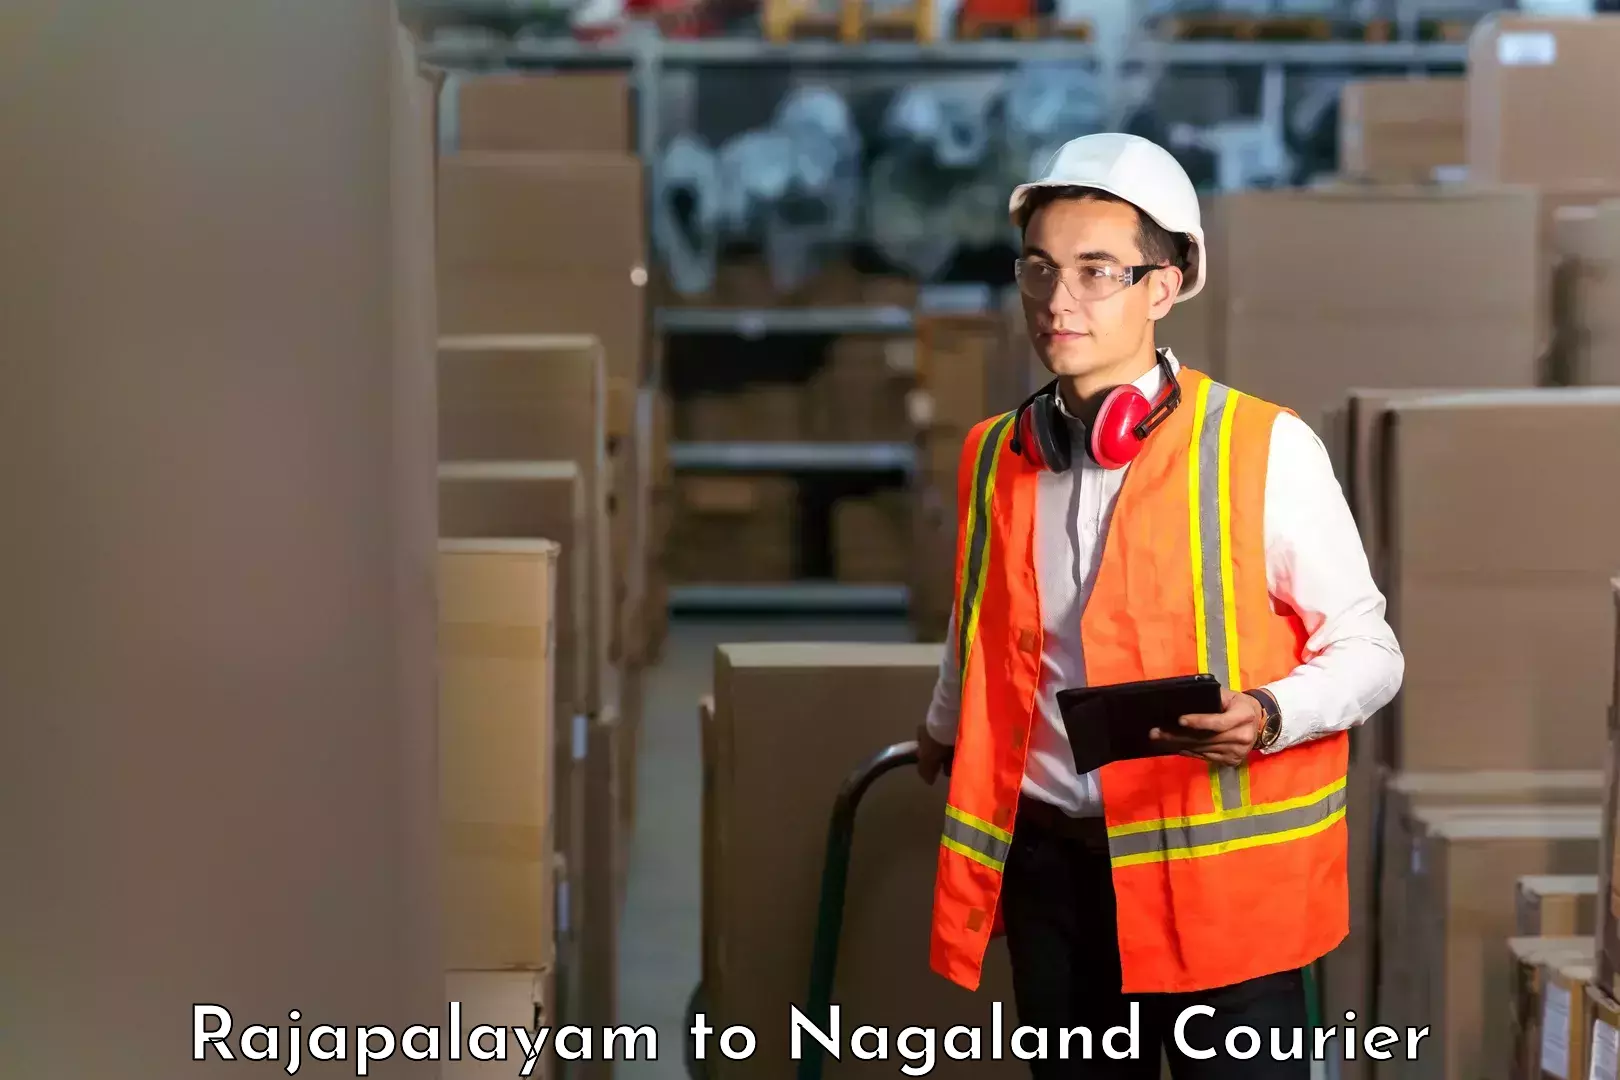 Global logistics network Rajapalayam to Nagaland